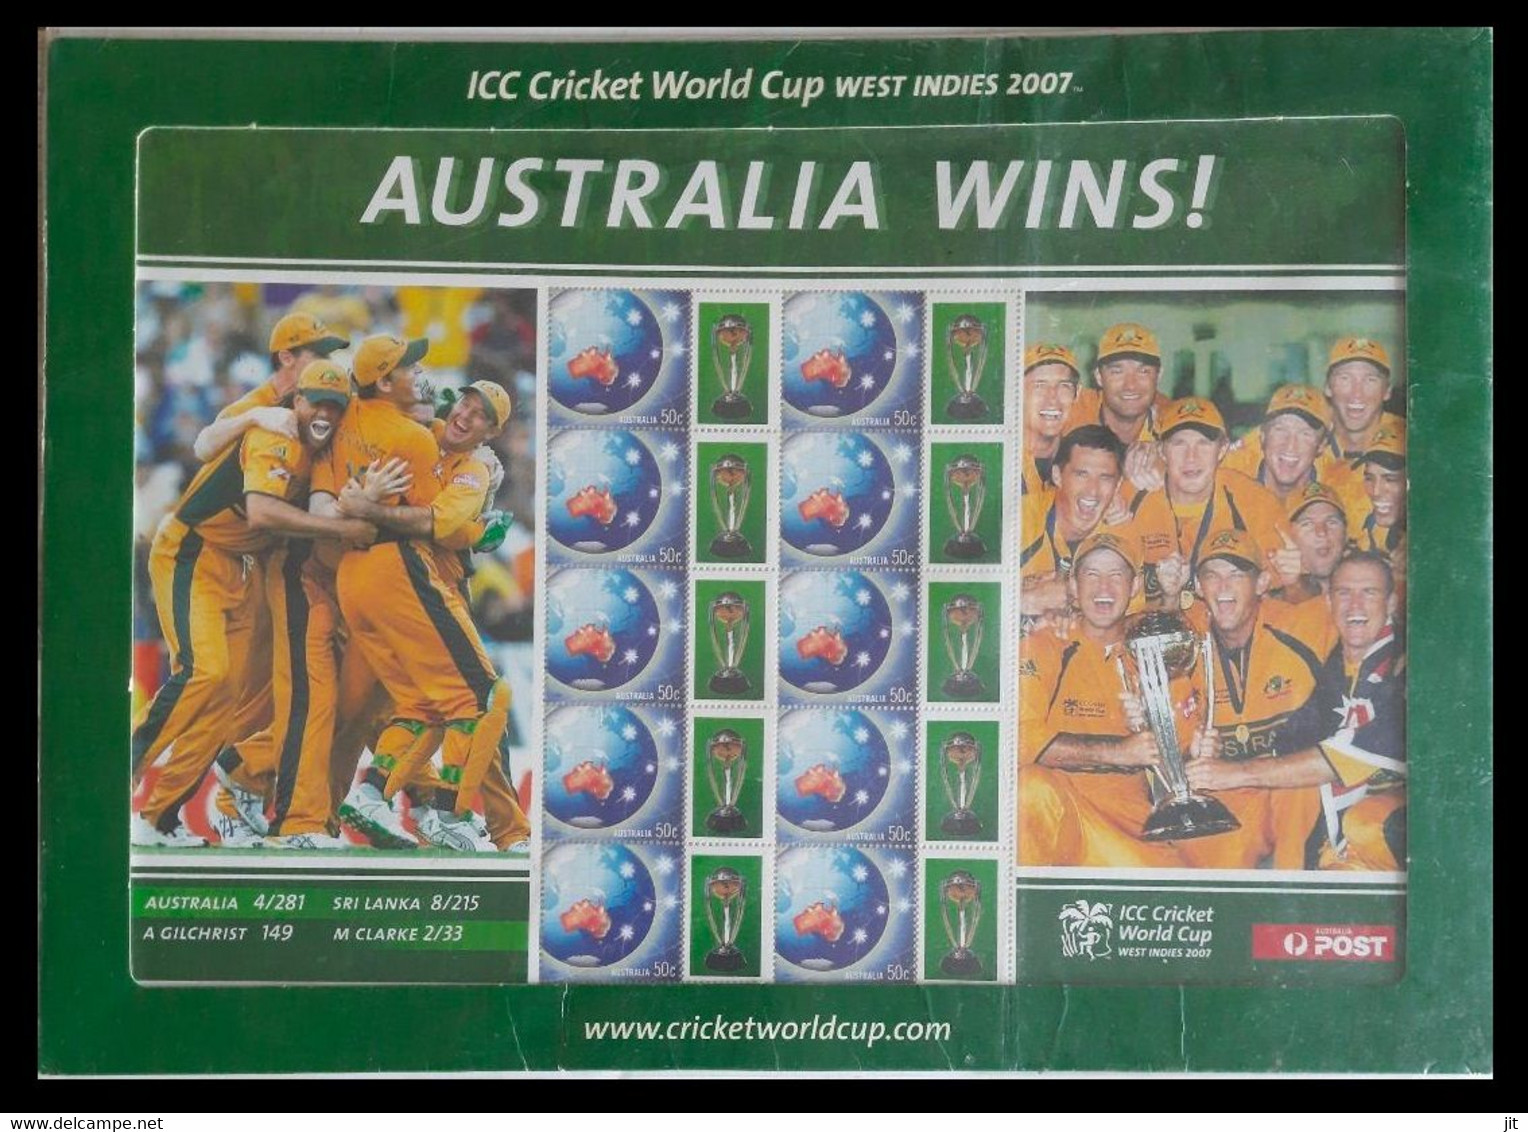 166. AUSTRALIA 2007 STAMP SHEET AUSTRALIA WINS !! ICC CRICKET WORLD CUP .MNH - Hojas, Bloques & Múltiples